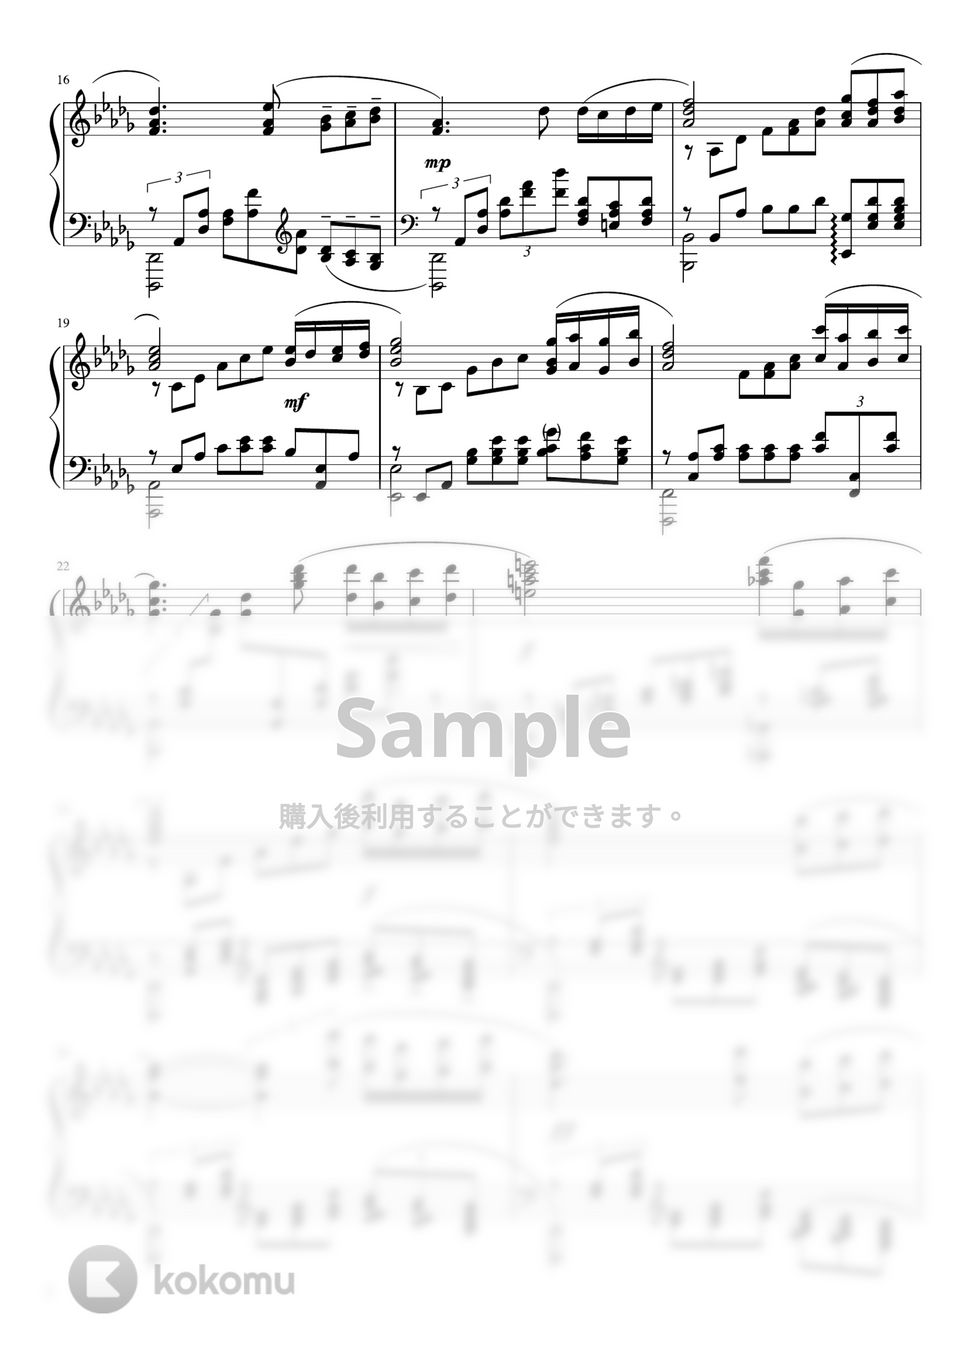 S.ラフマニノフ - パガニーニの主題による狂詩曲より第18変奏 (D♭・ピアノソロ 中〜上級) by pfkaori